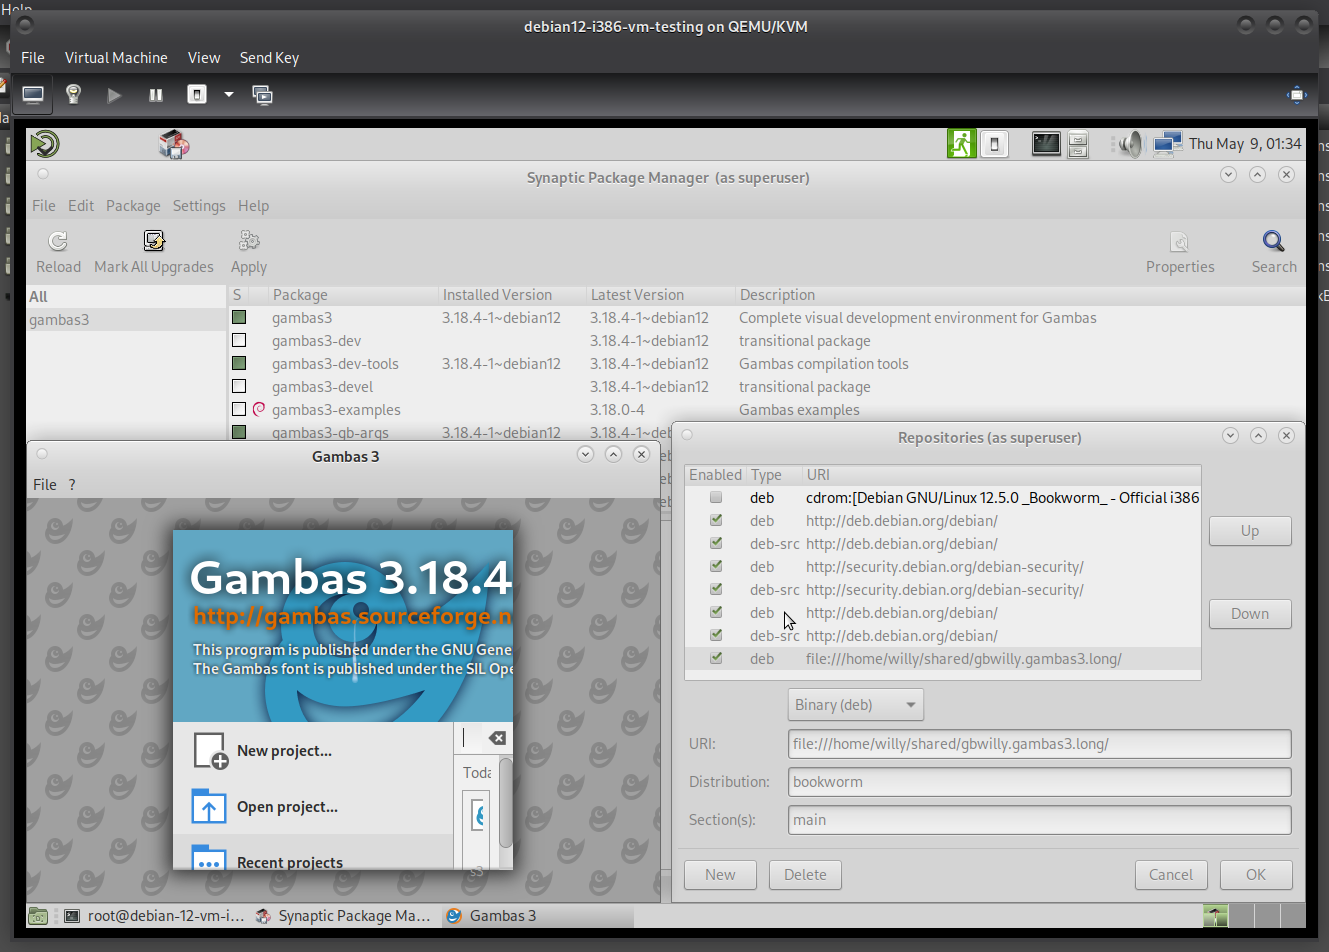 gambas-3.18.4-debian12-i386-file-repo.png